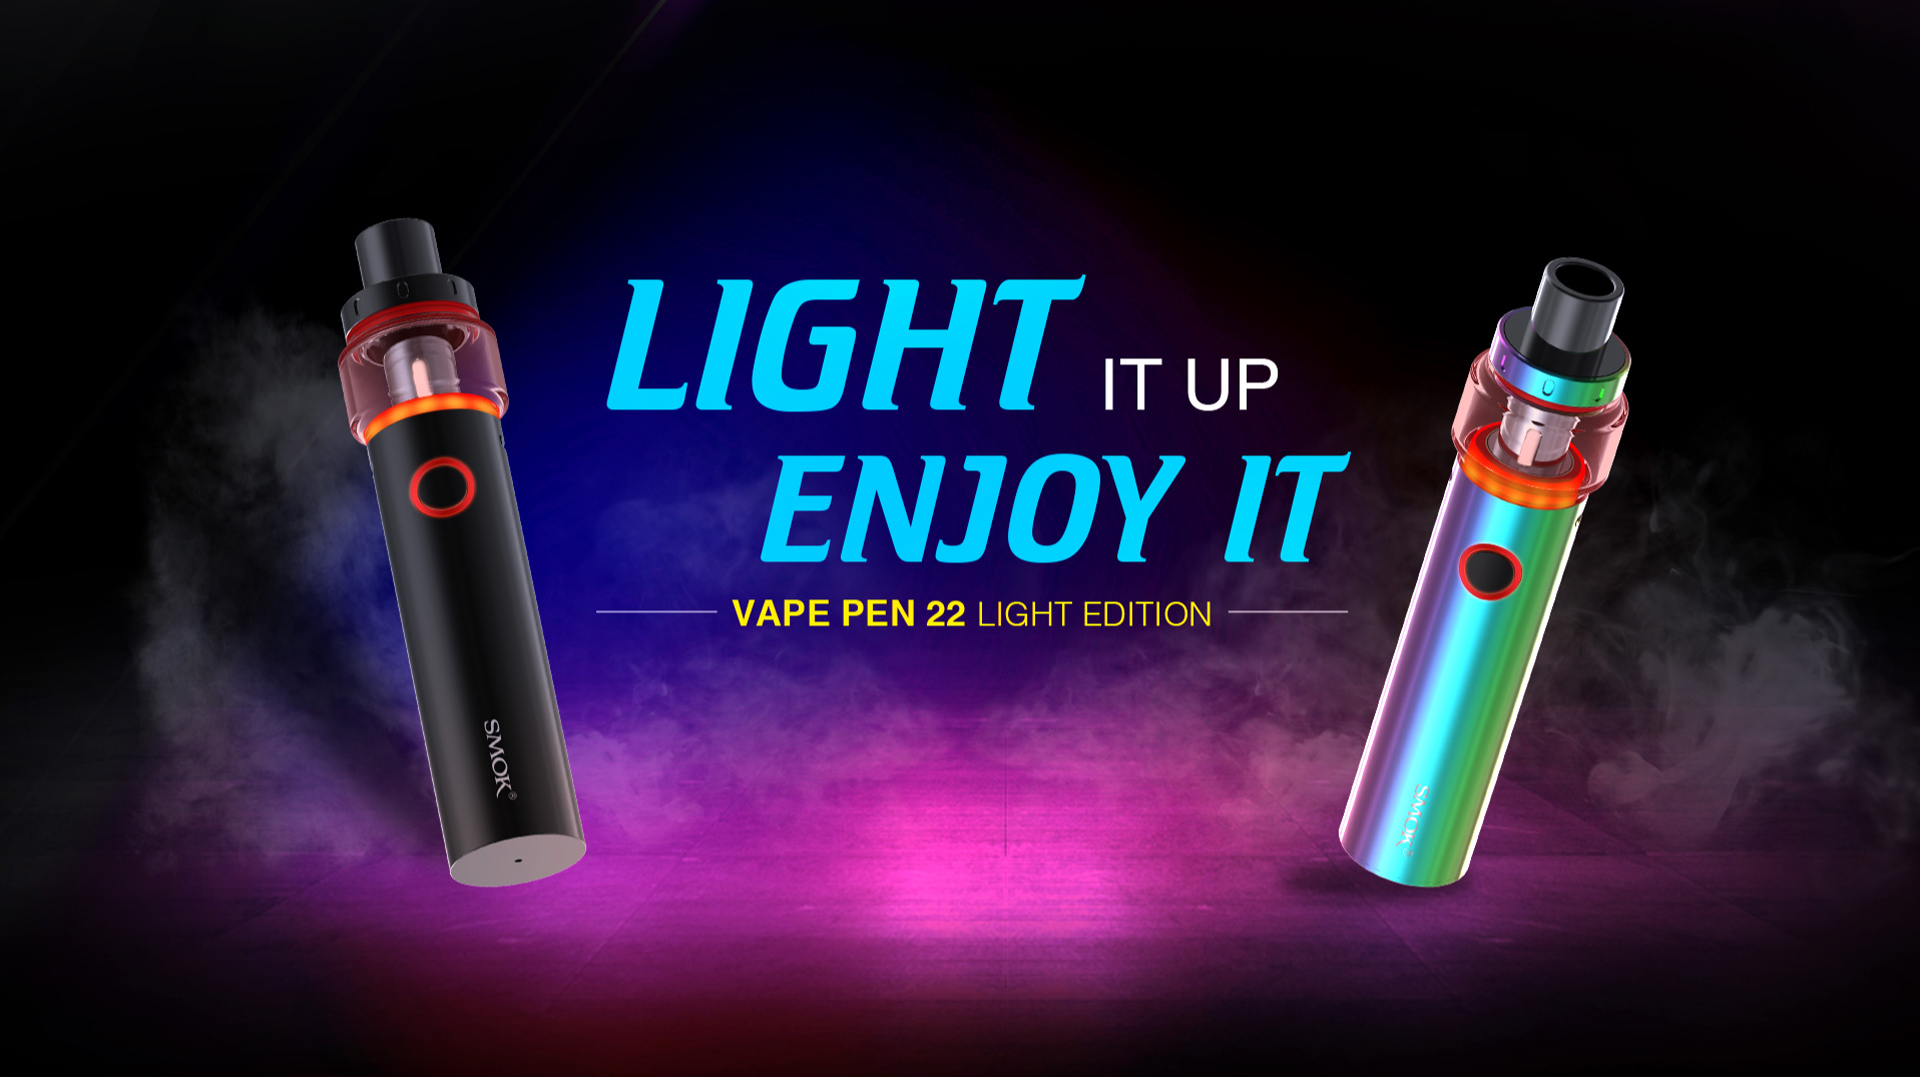 vape pen battery light colors meaning